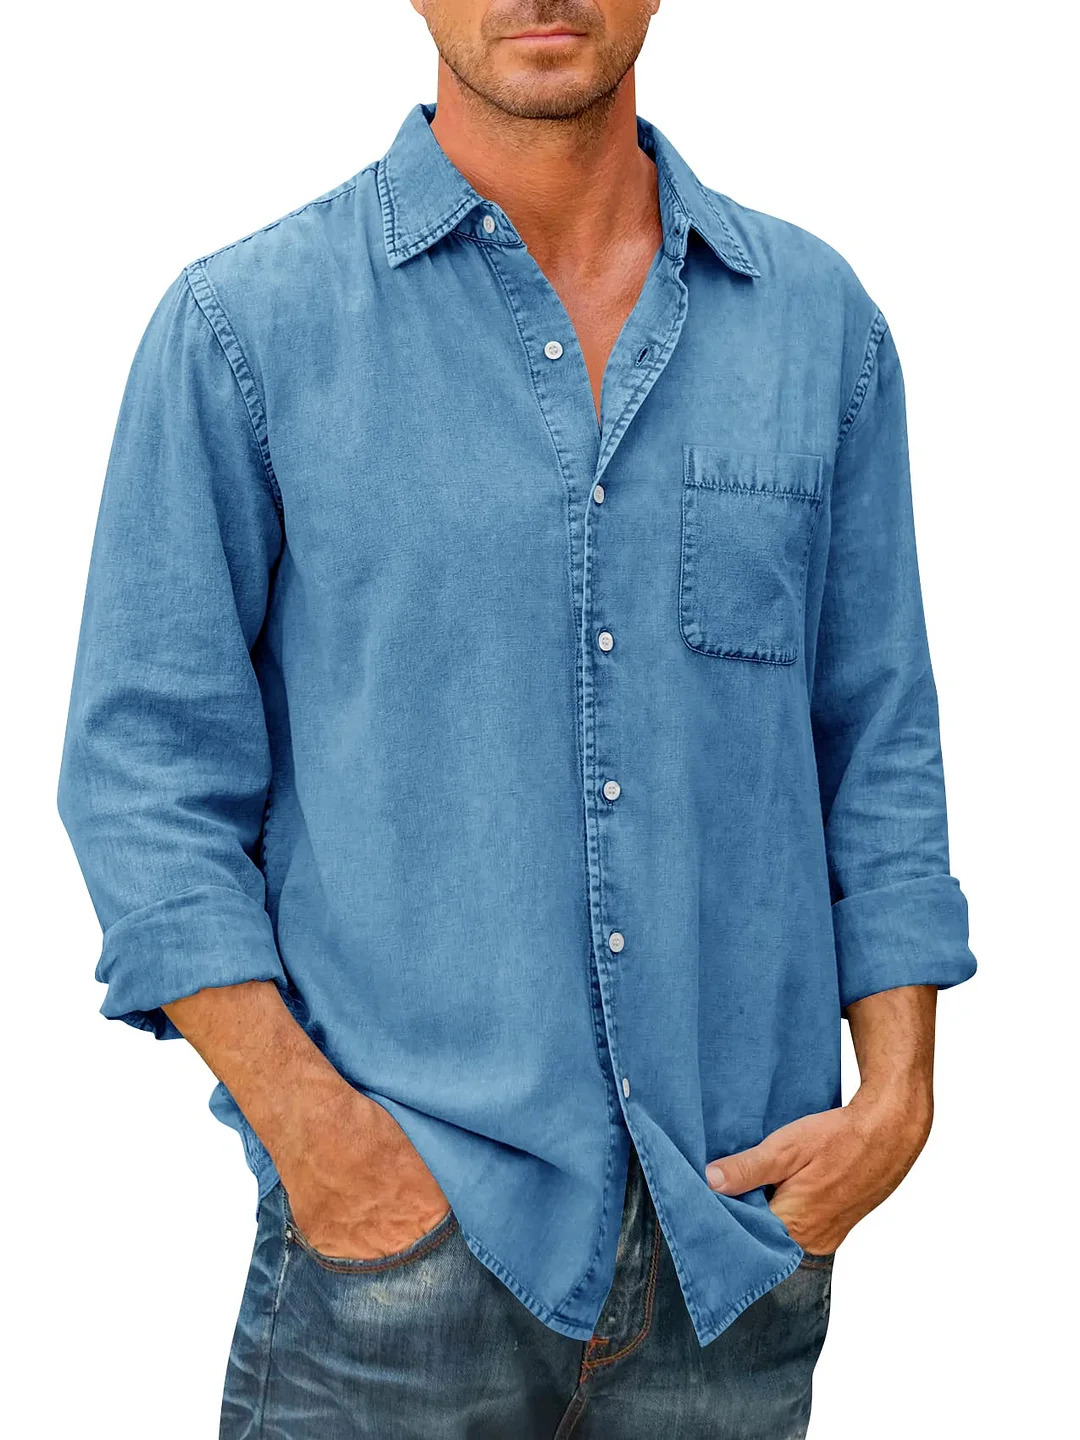 Men's Denim Style Shirt 【Long Sleeve】